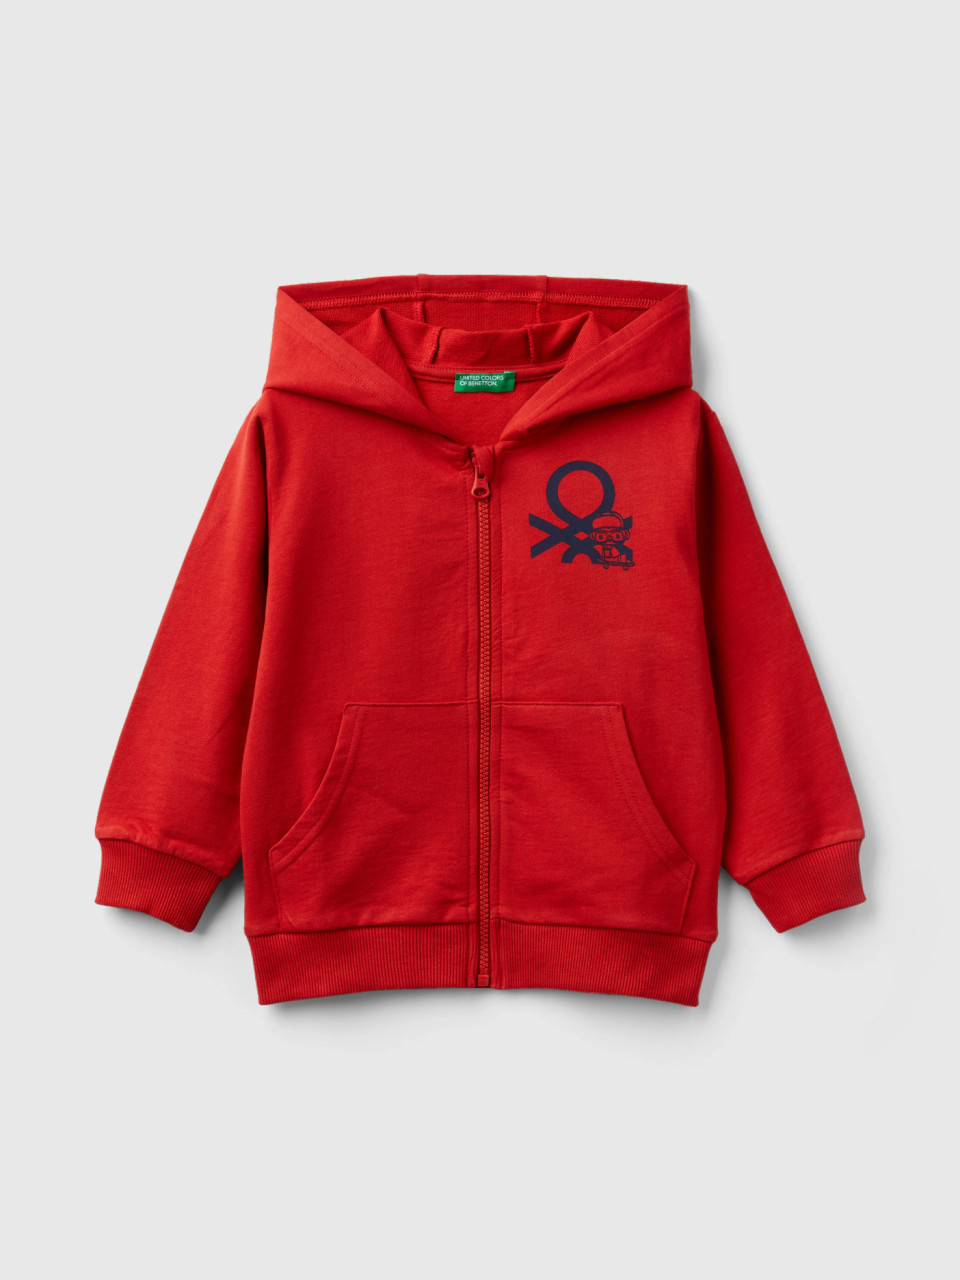 Benetton, Lightweight Sweatshirt With Zip, Brick Red, Kids